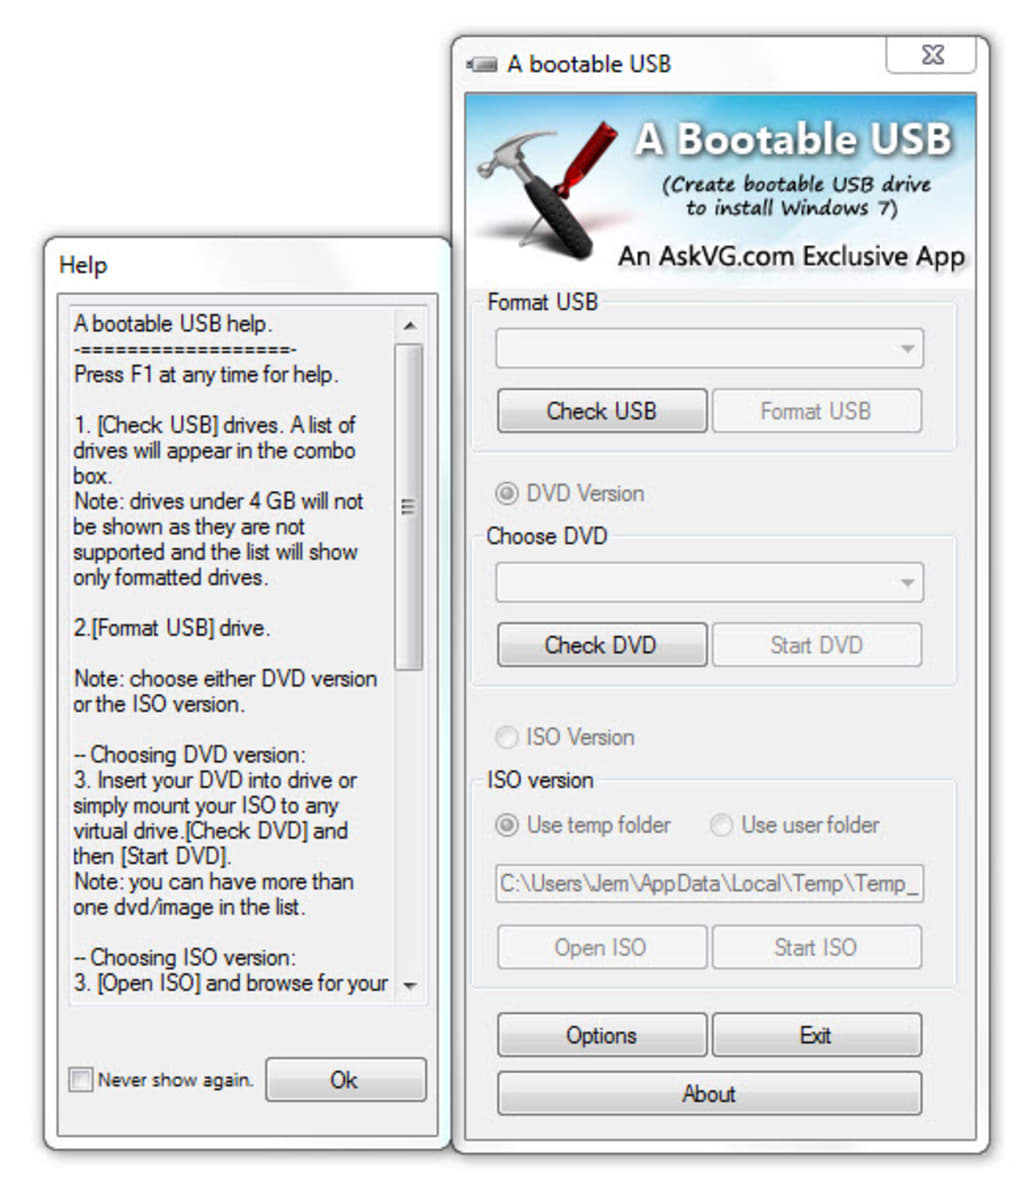 Windows 7 A Bootable USB 0.9.6.508 beta full